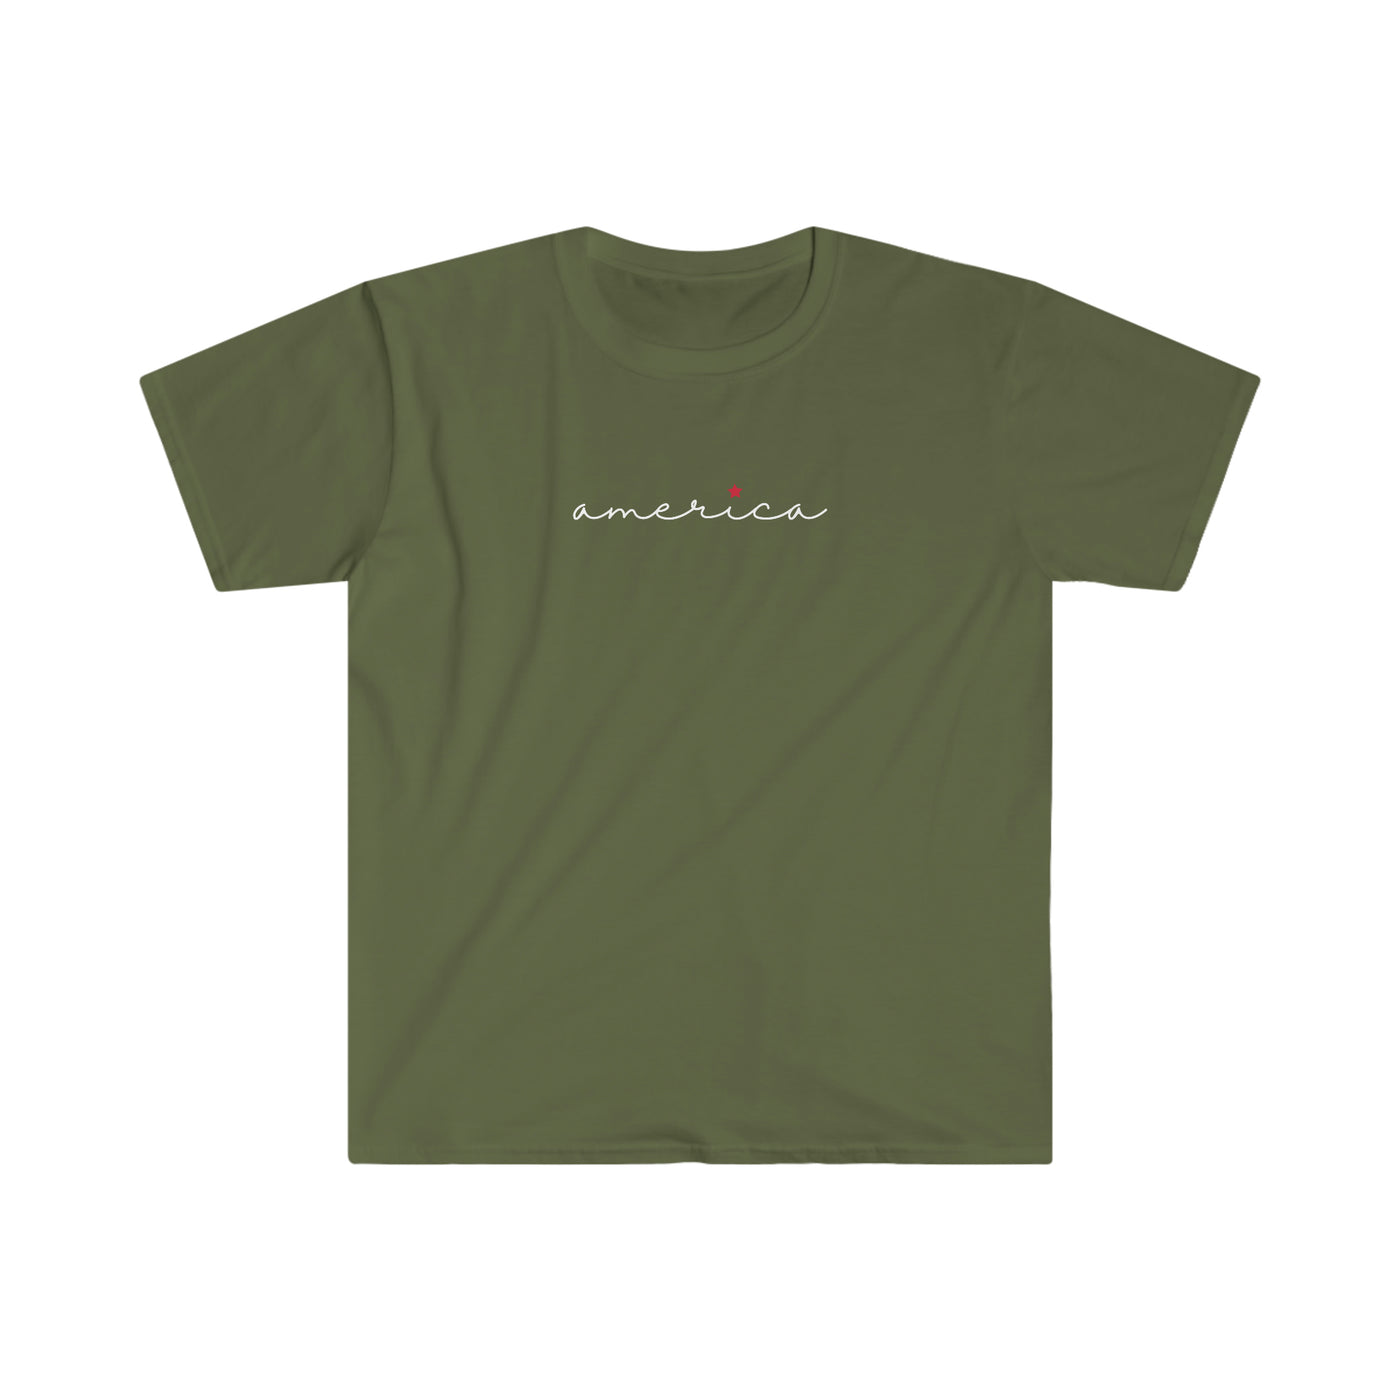 America Unisex T-Shirt